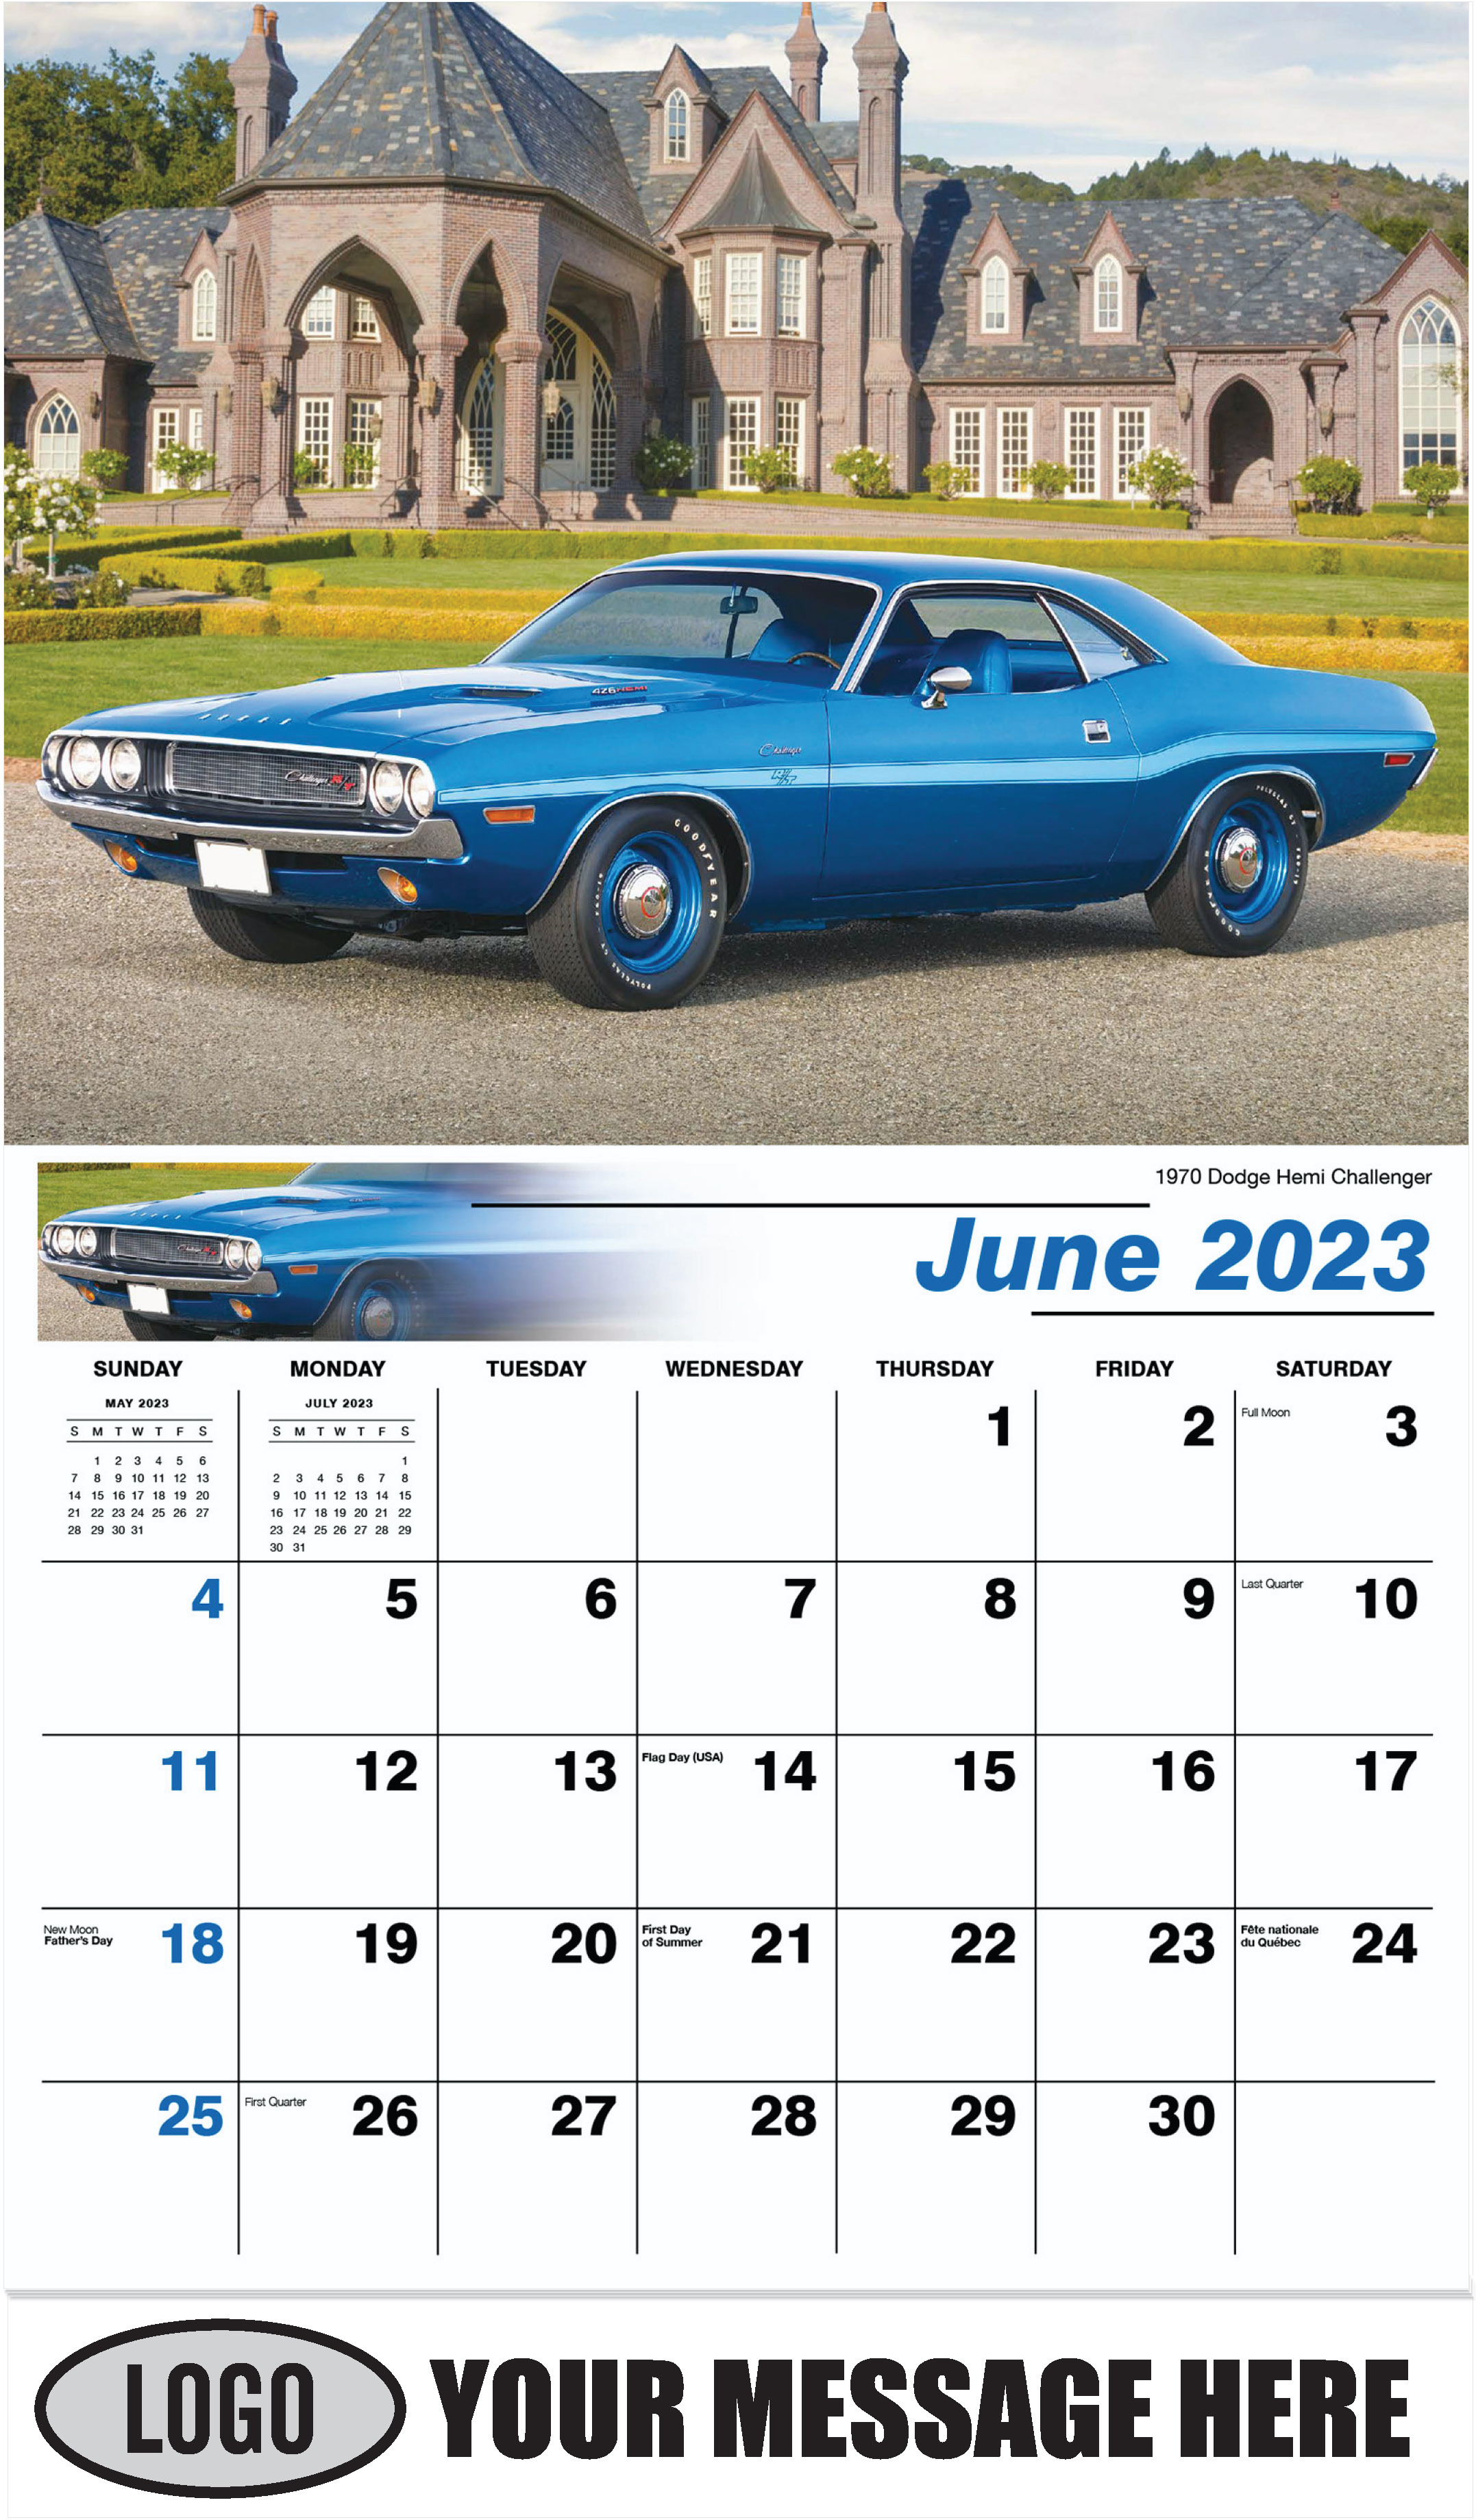 1970 Dodge Hemi Challenger - June - Classic Cars 2023 Promotional Calendar